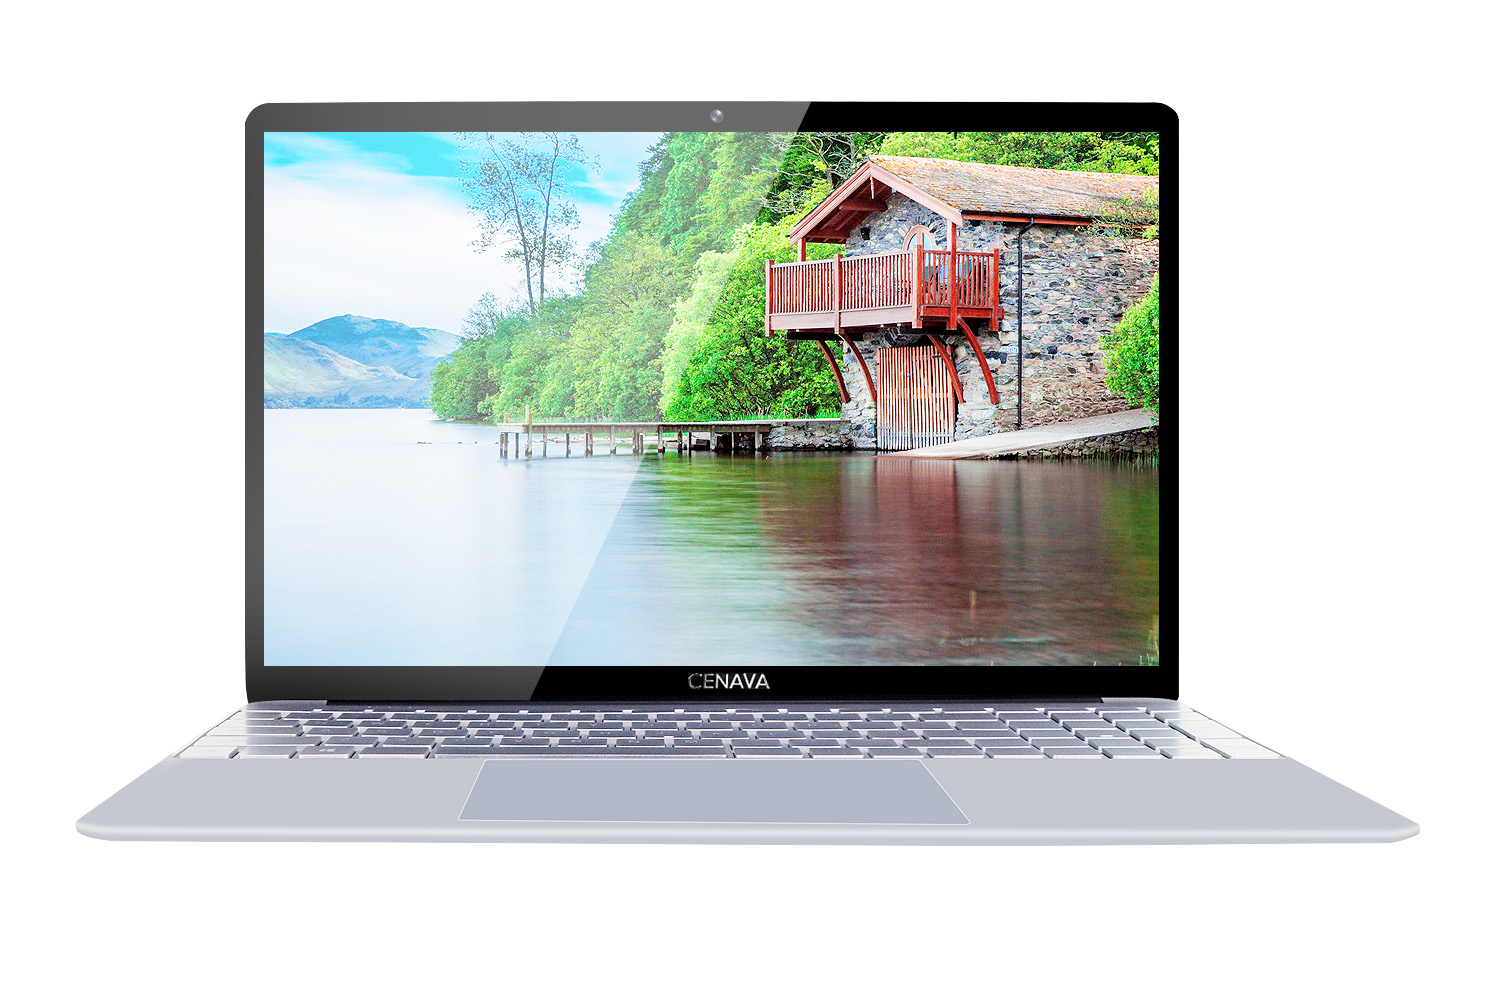 

CENAVA F151 Laptop 15.6 inch Intel Core J3355 Intel HD Graphics 500 Win10 6G RAM 256GB SSD Notebook TN Screen